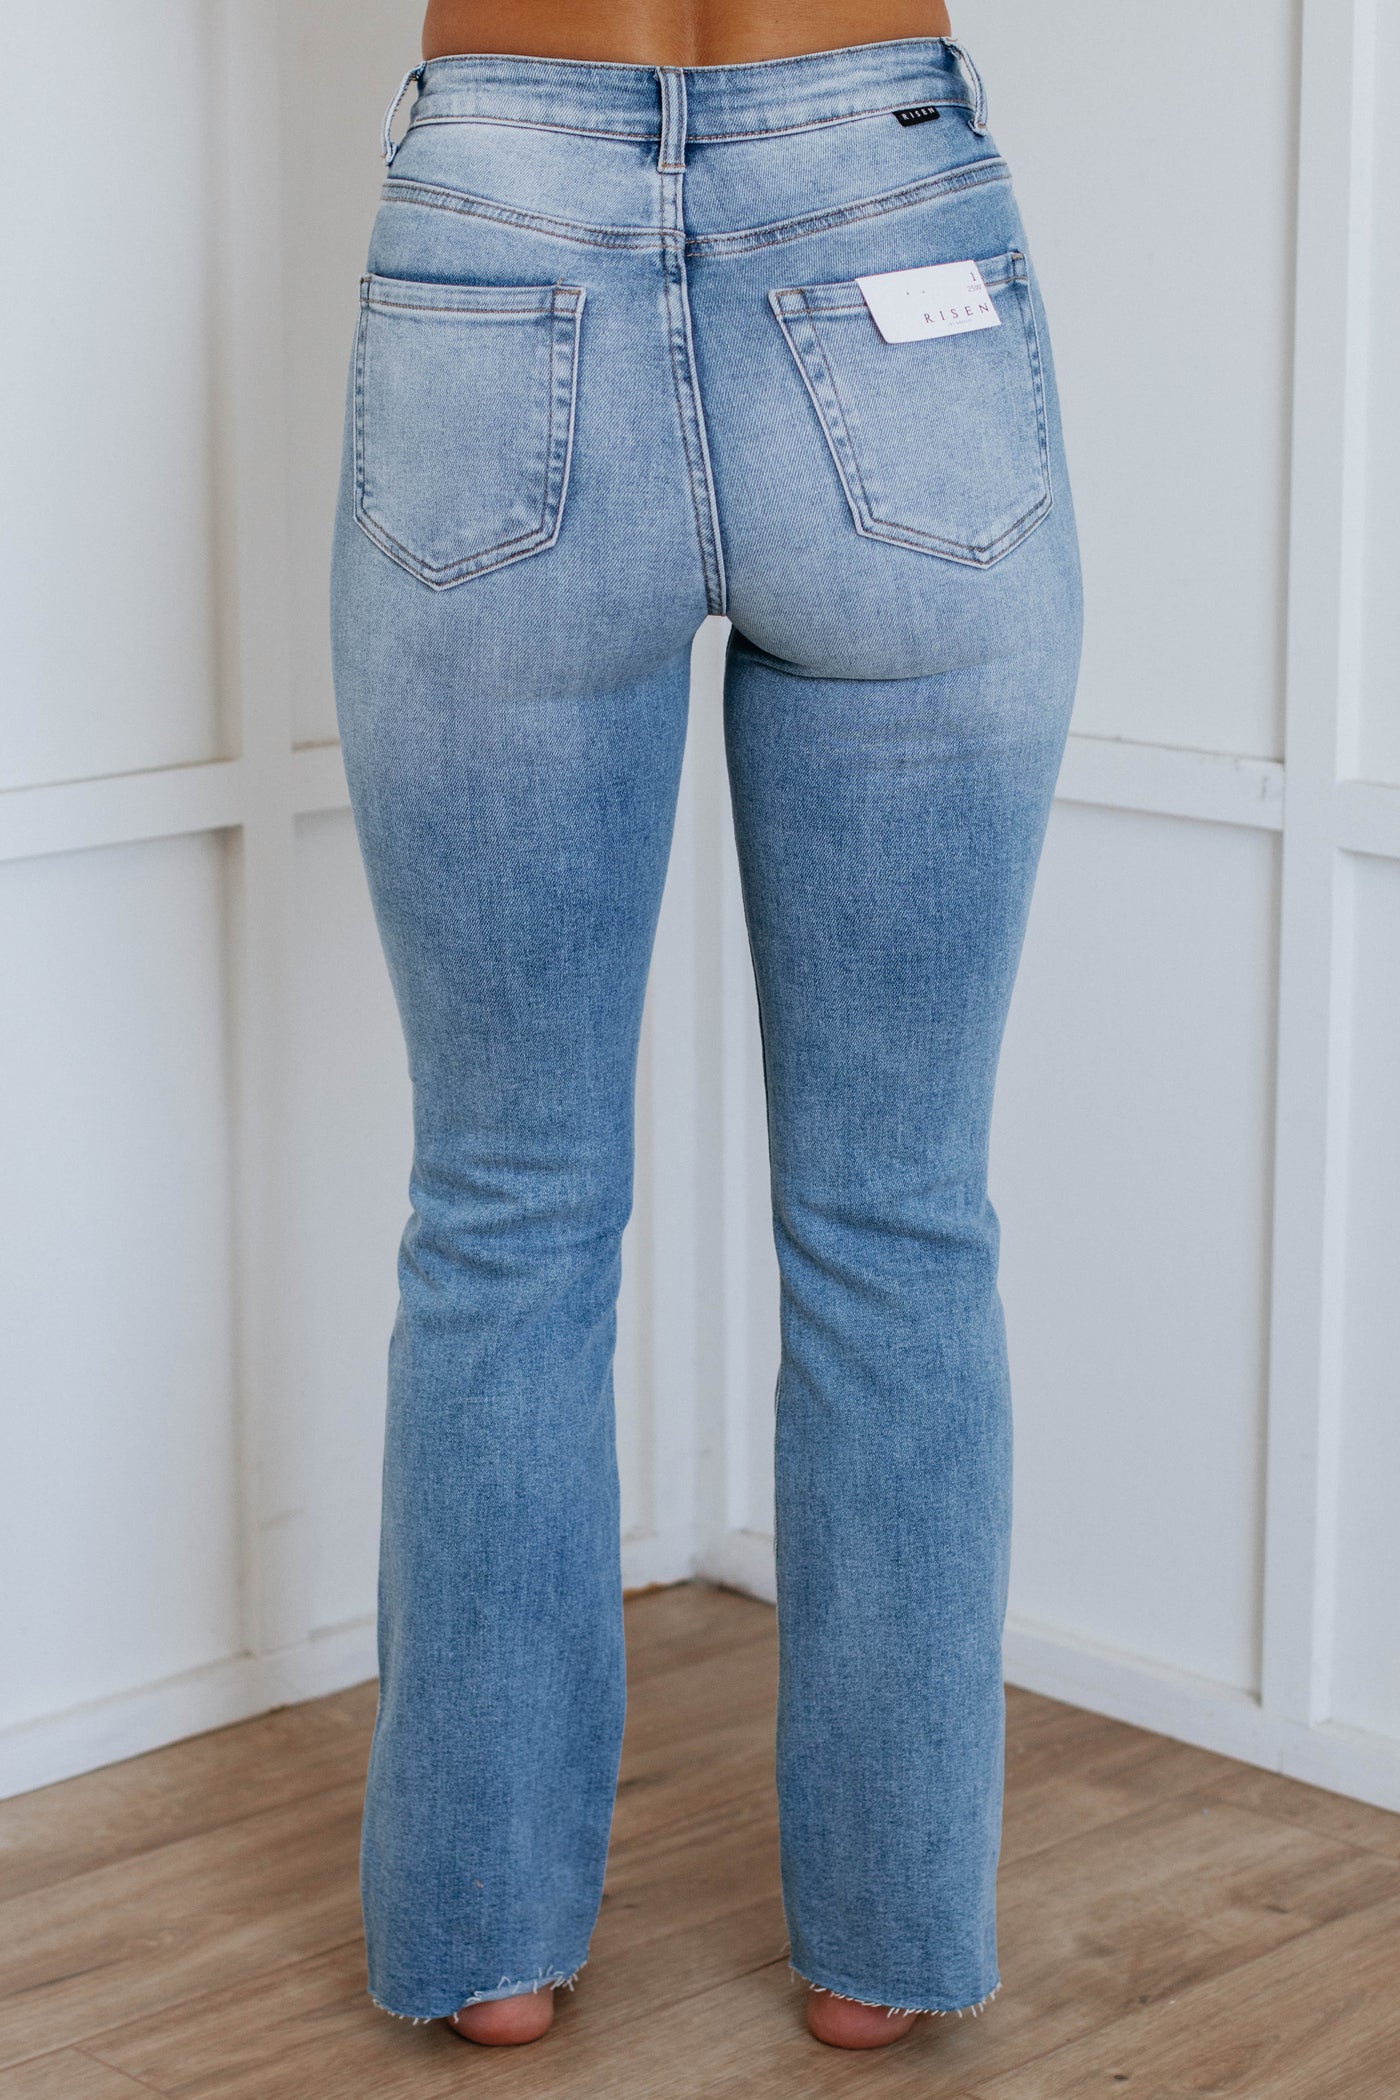 Amber Risen Jeans